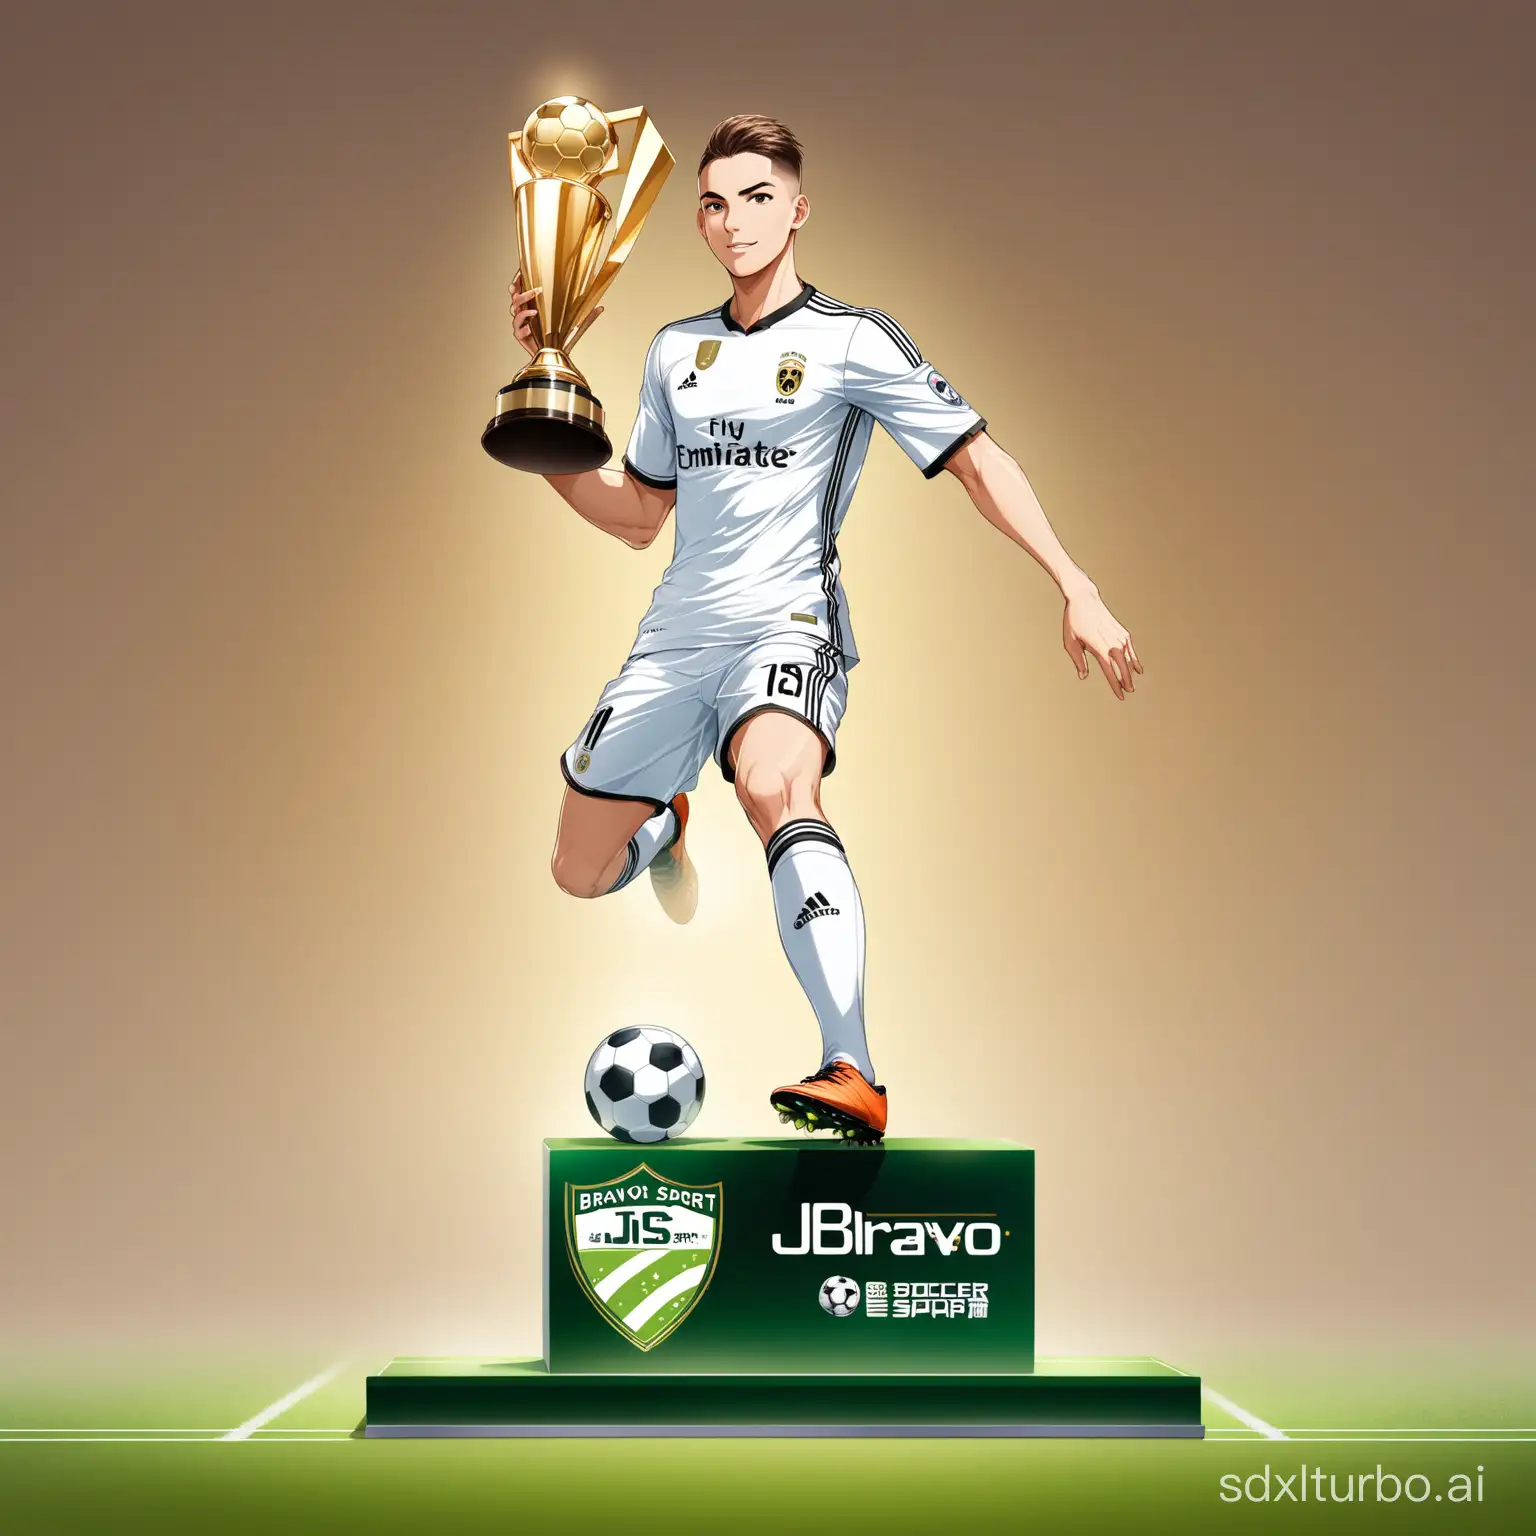 JS-Bravo-Sport-Soccer-Player-11-Receiving-Trophy-Celebration